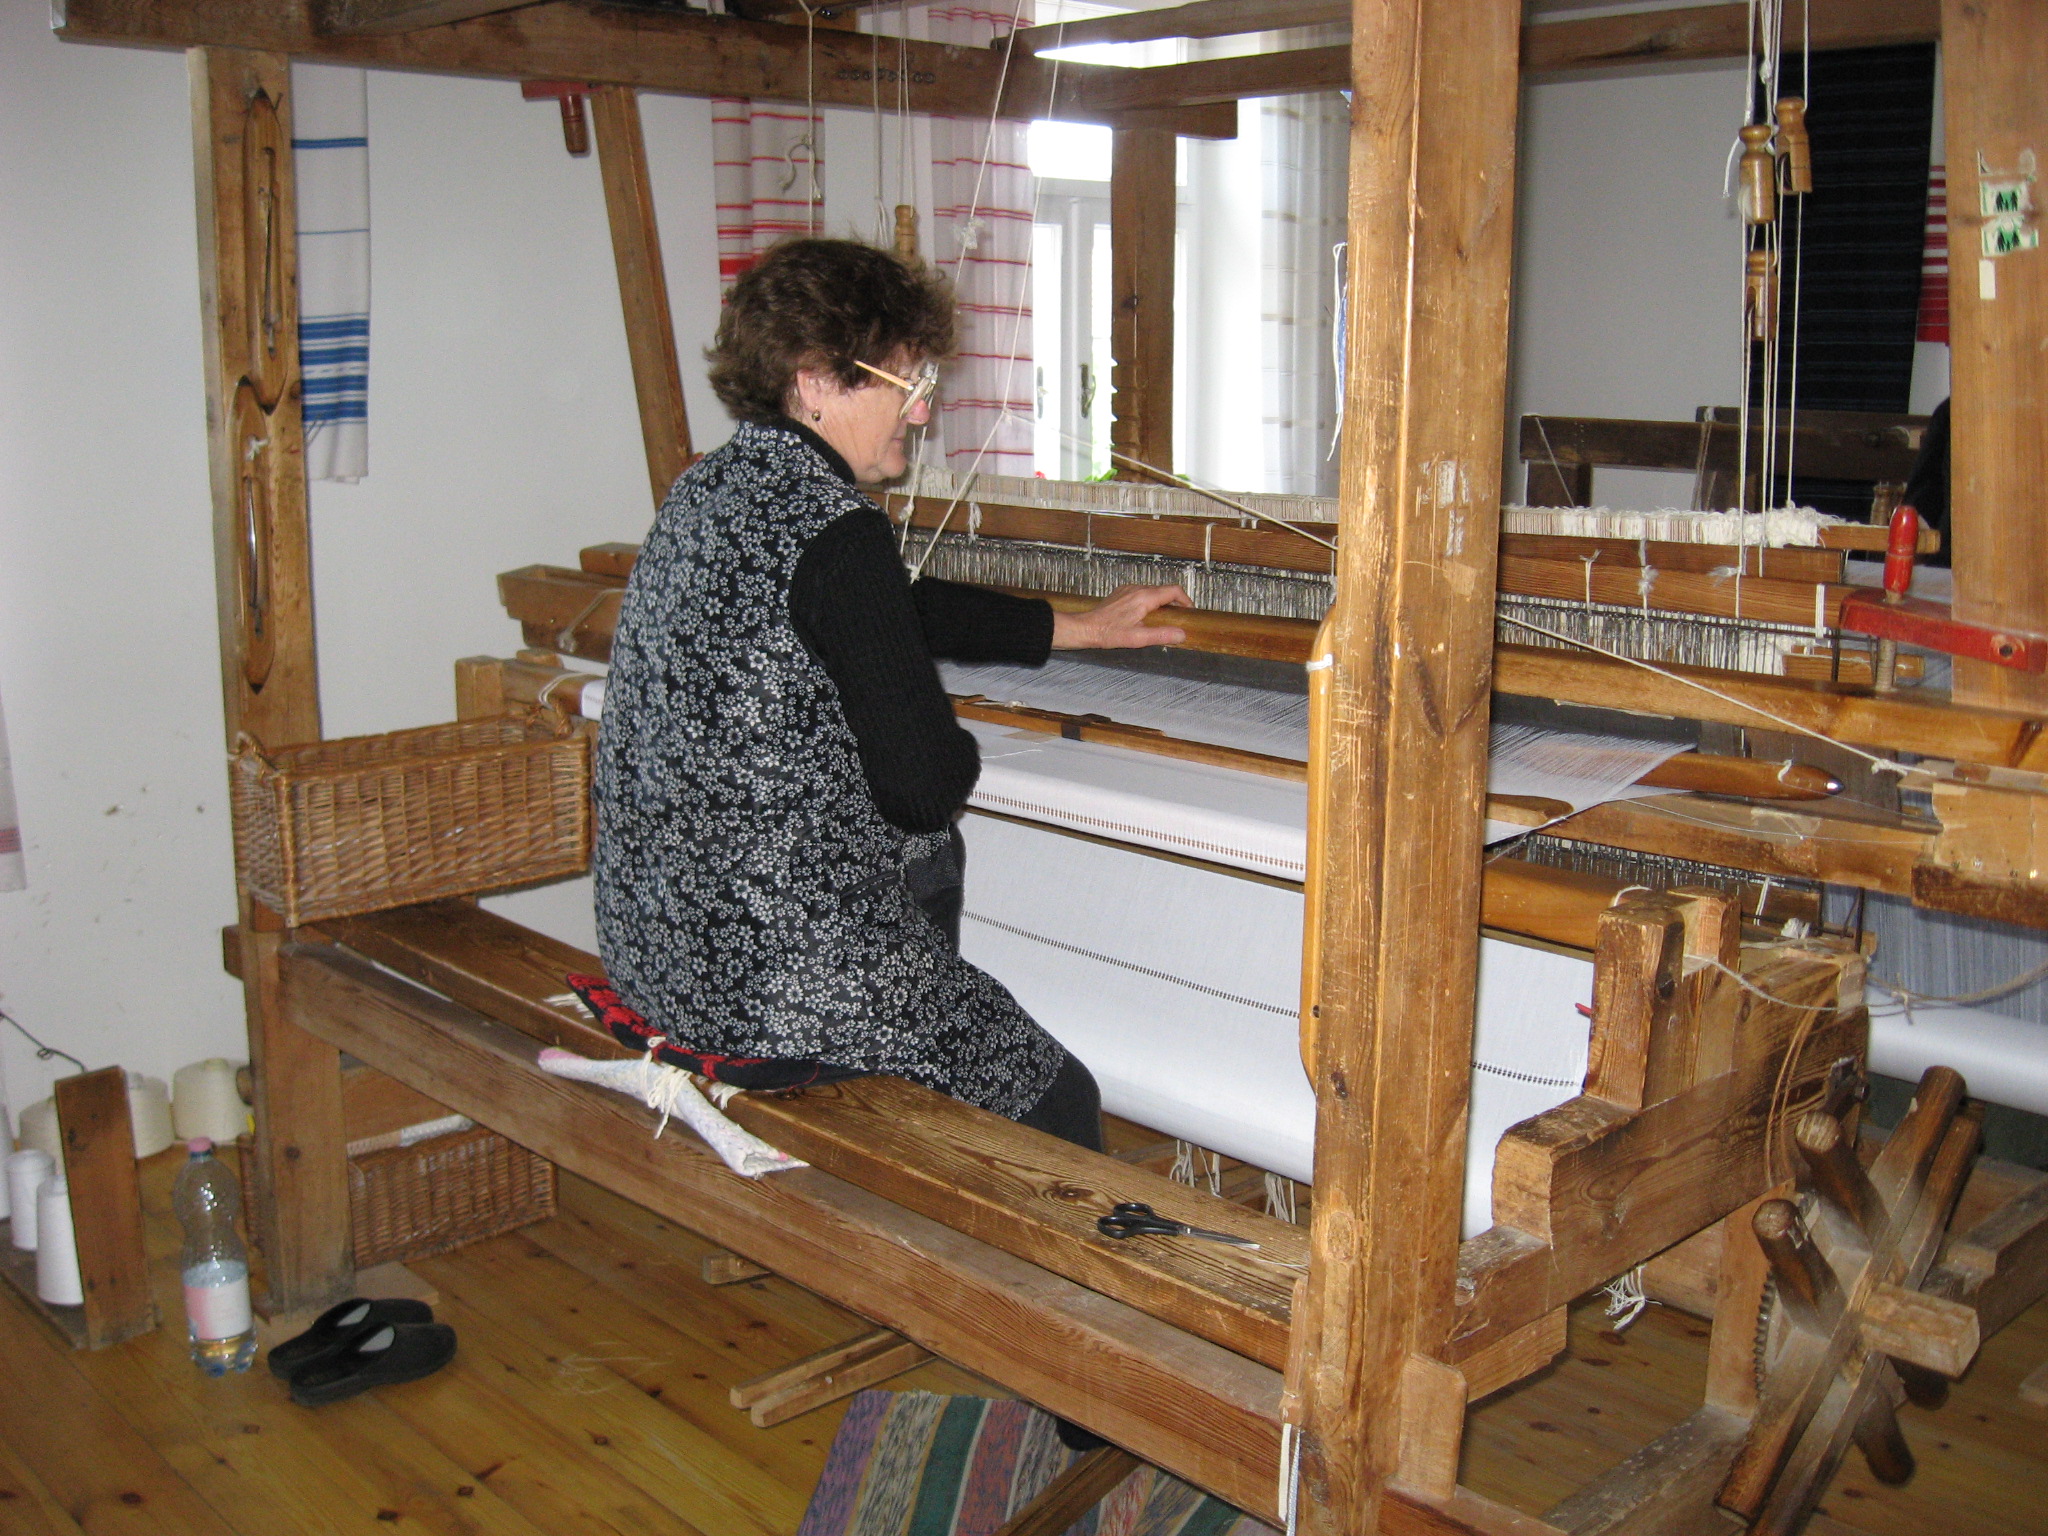 Traditional loom